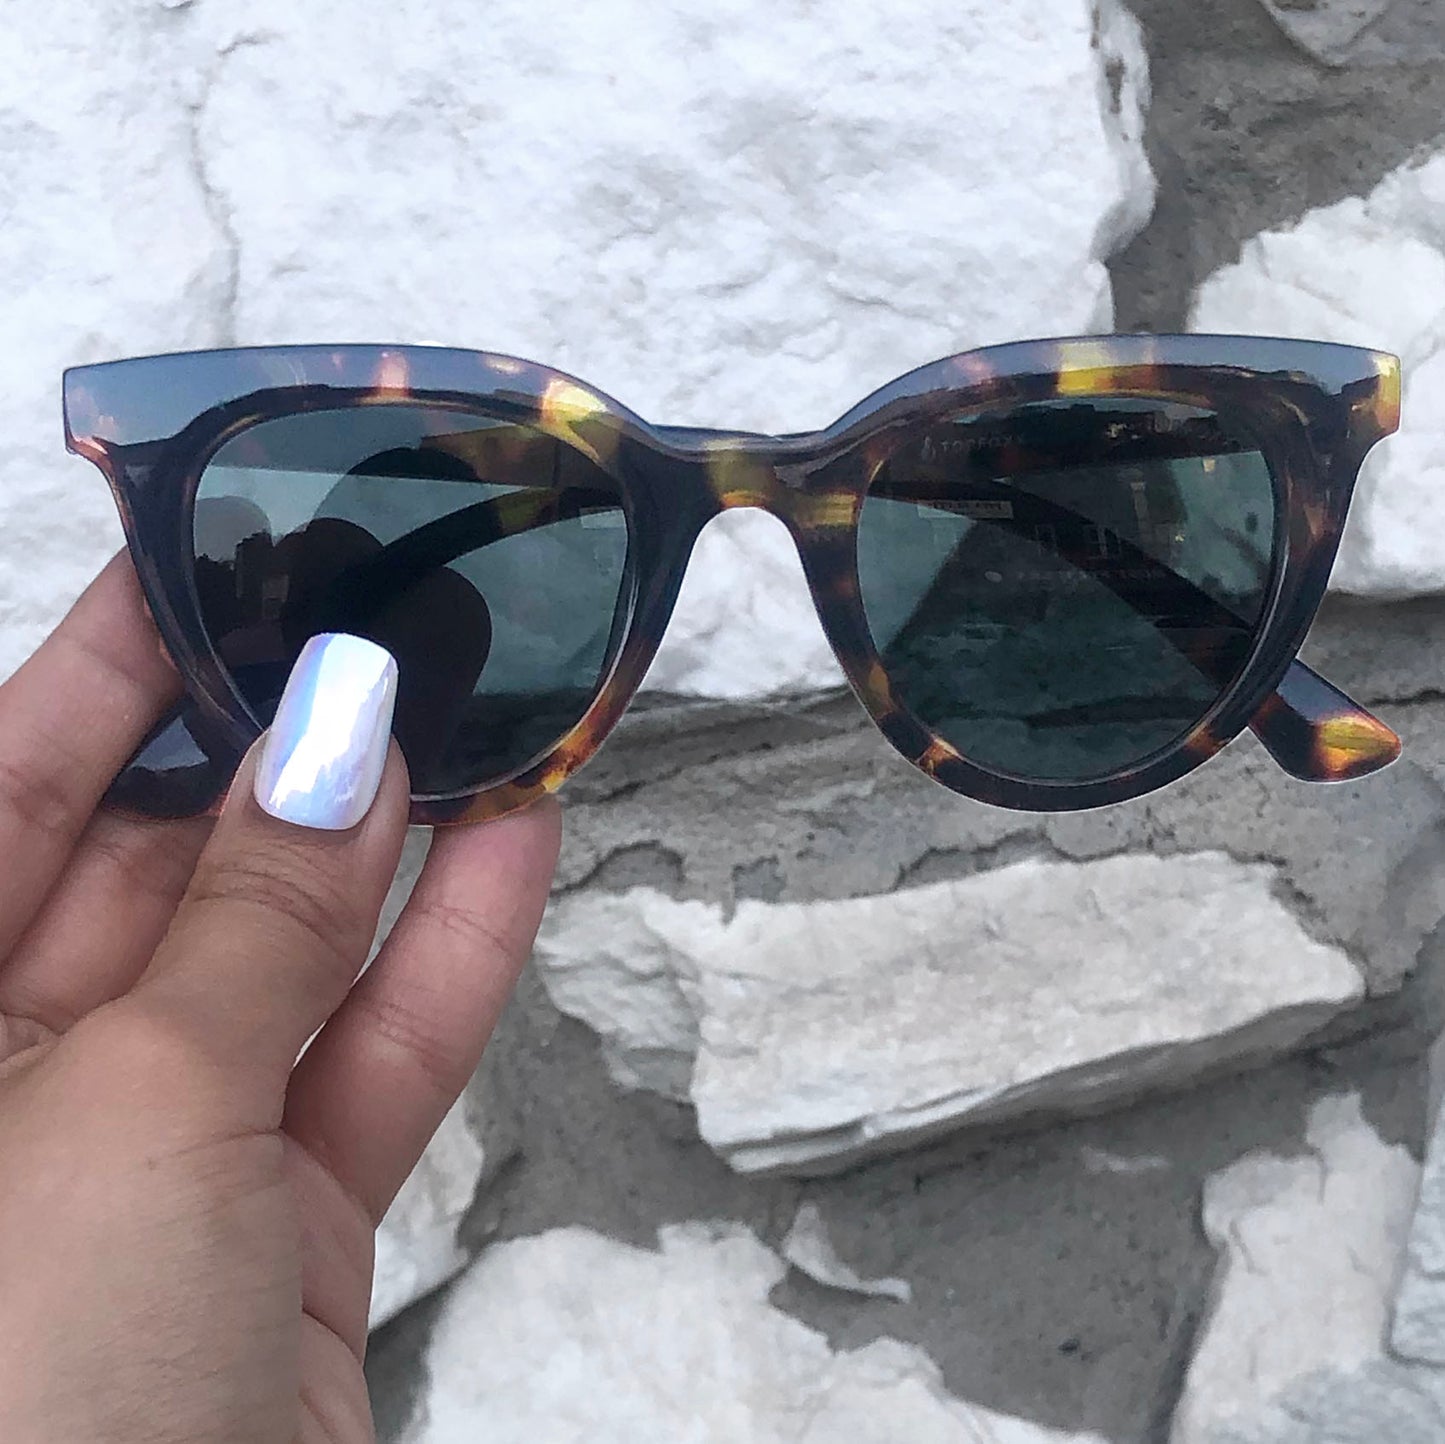 TopFoxx - Brttannt Tortoise Shell - Round Sunglasses for Women - Cute Tortoise Sunnies